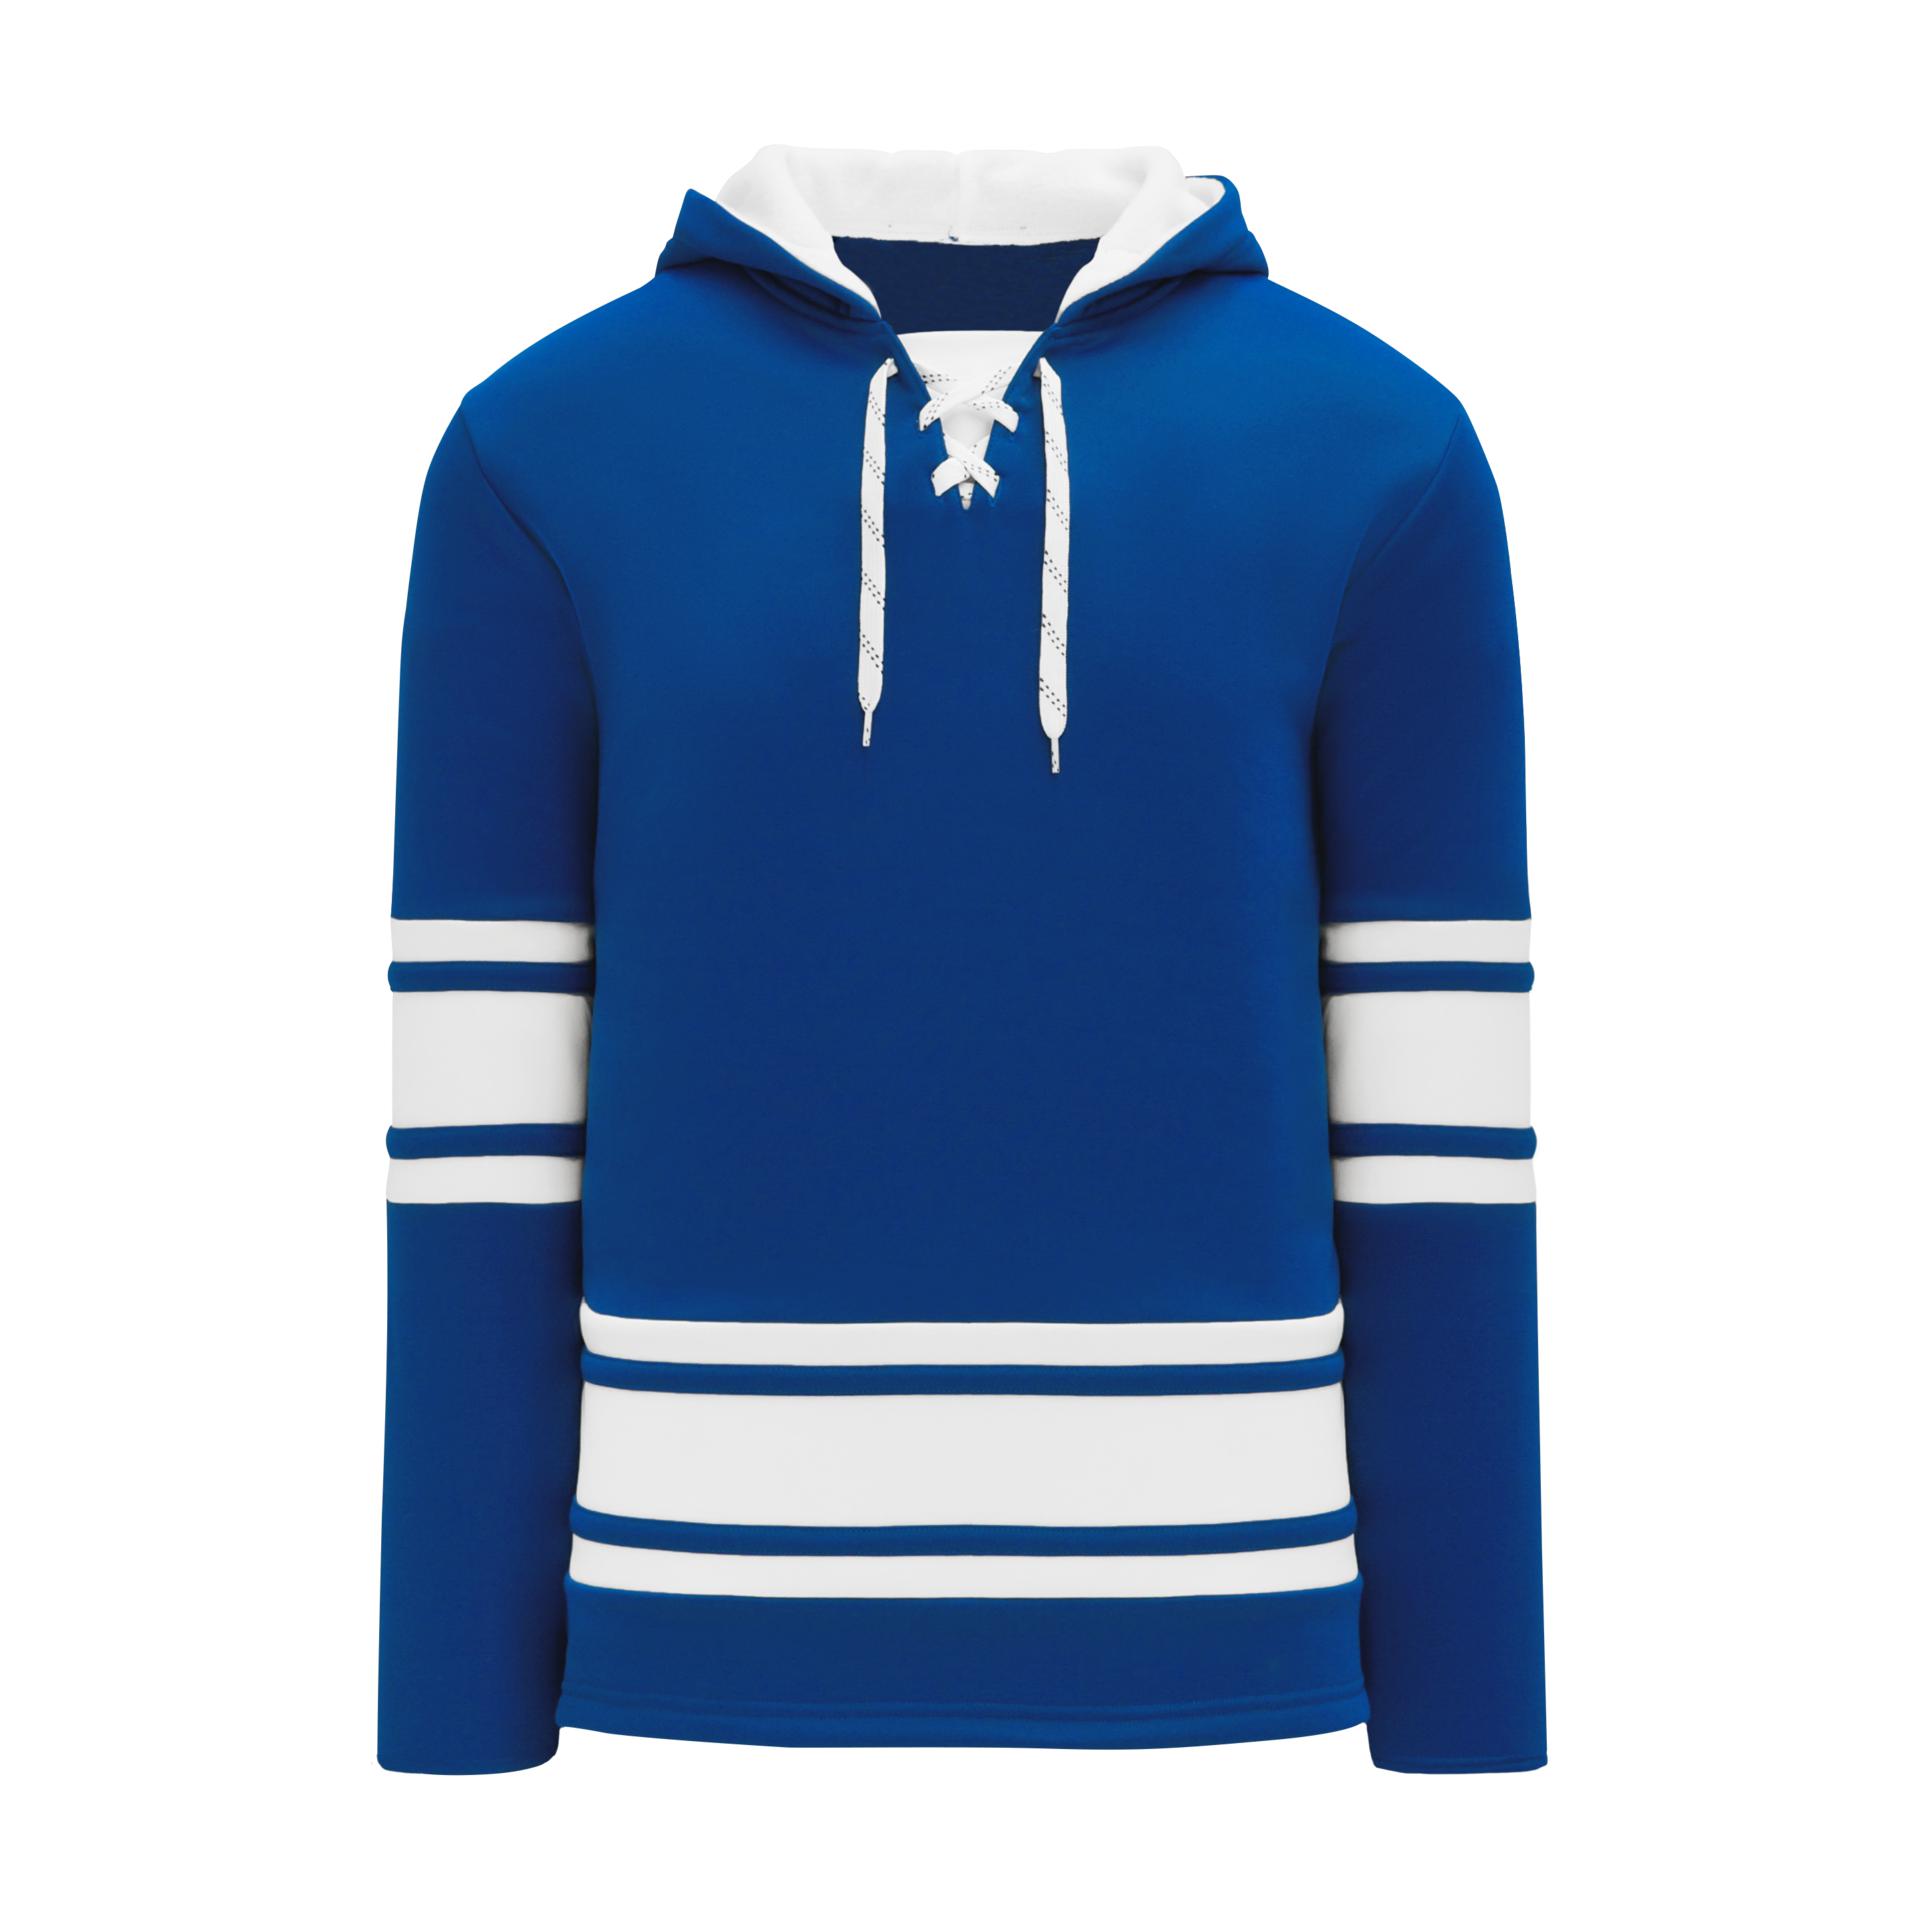 Toronto Maple Leafs Hoodies, Maple Leafs Sweatshirts, Fleeces